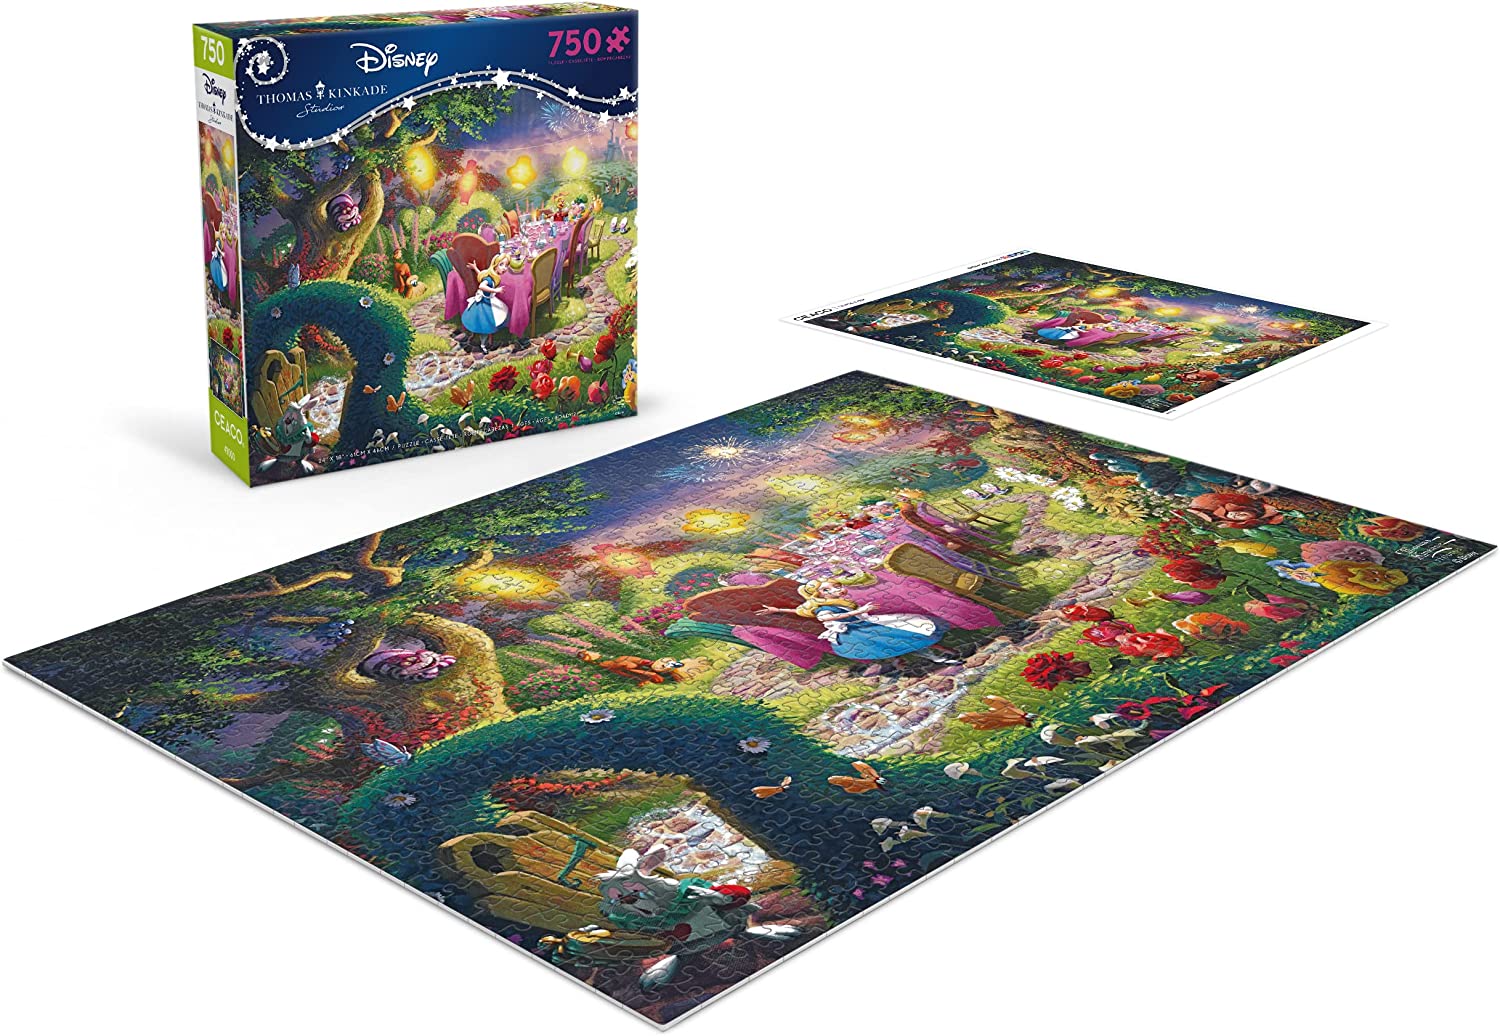 Ceaco - Thomas Kinkade Disney - Sleeping Beauty - 750 Piece Jigsaw Puzzle 